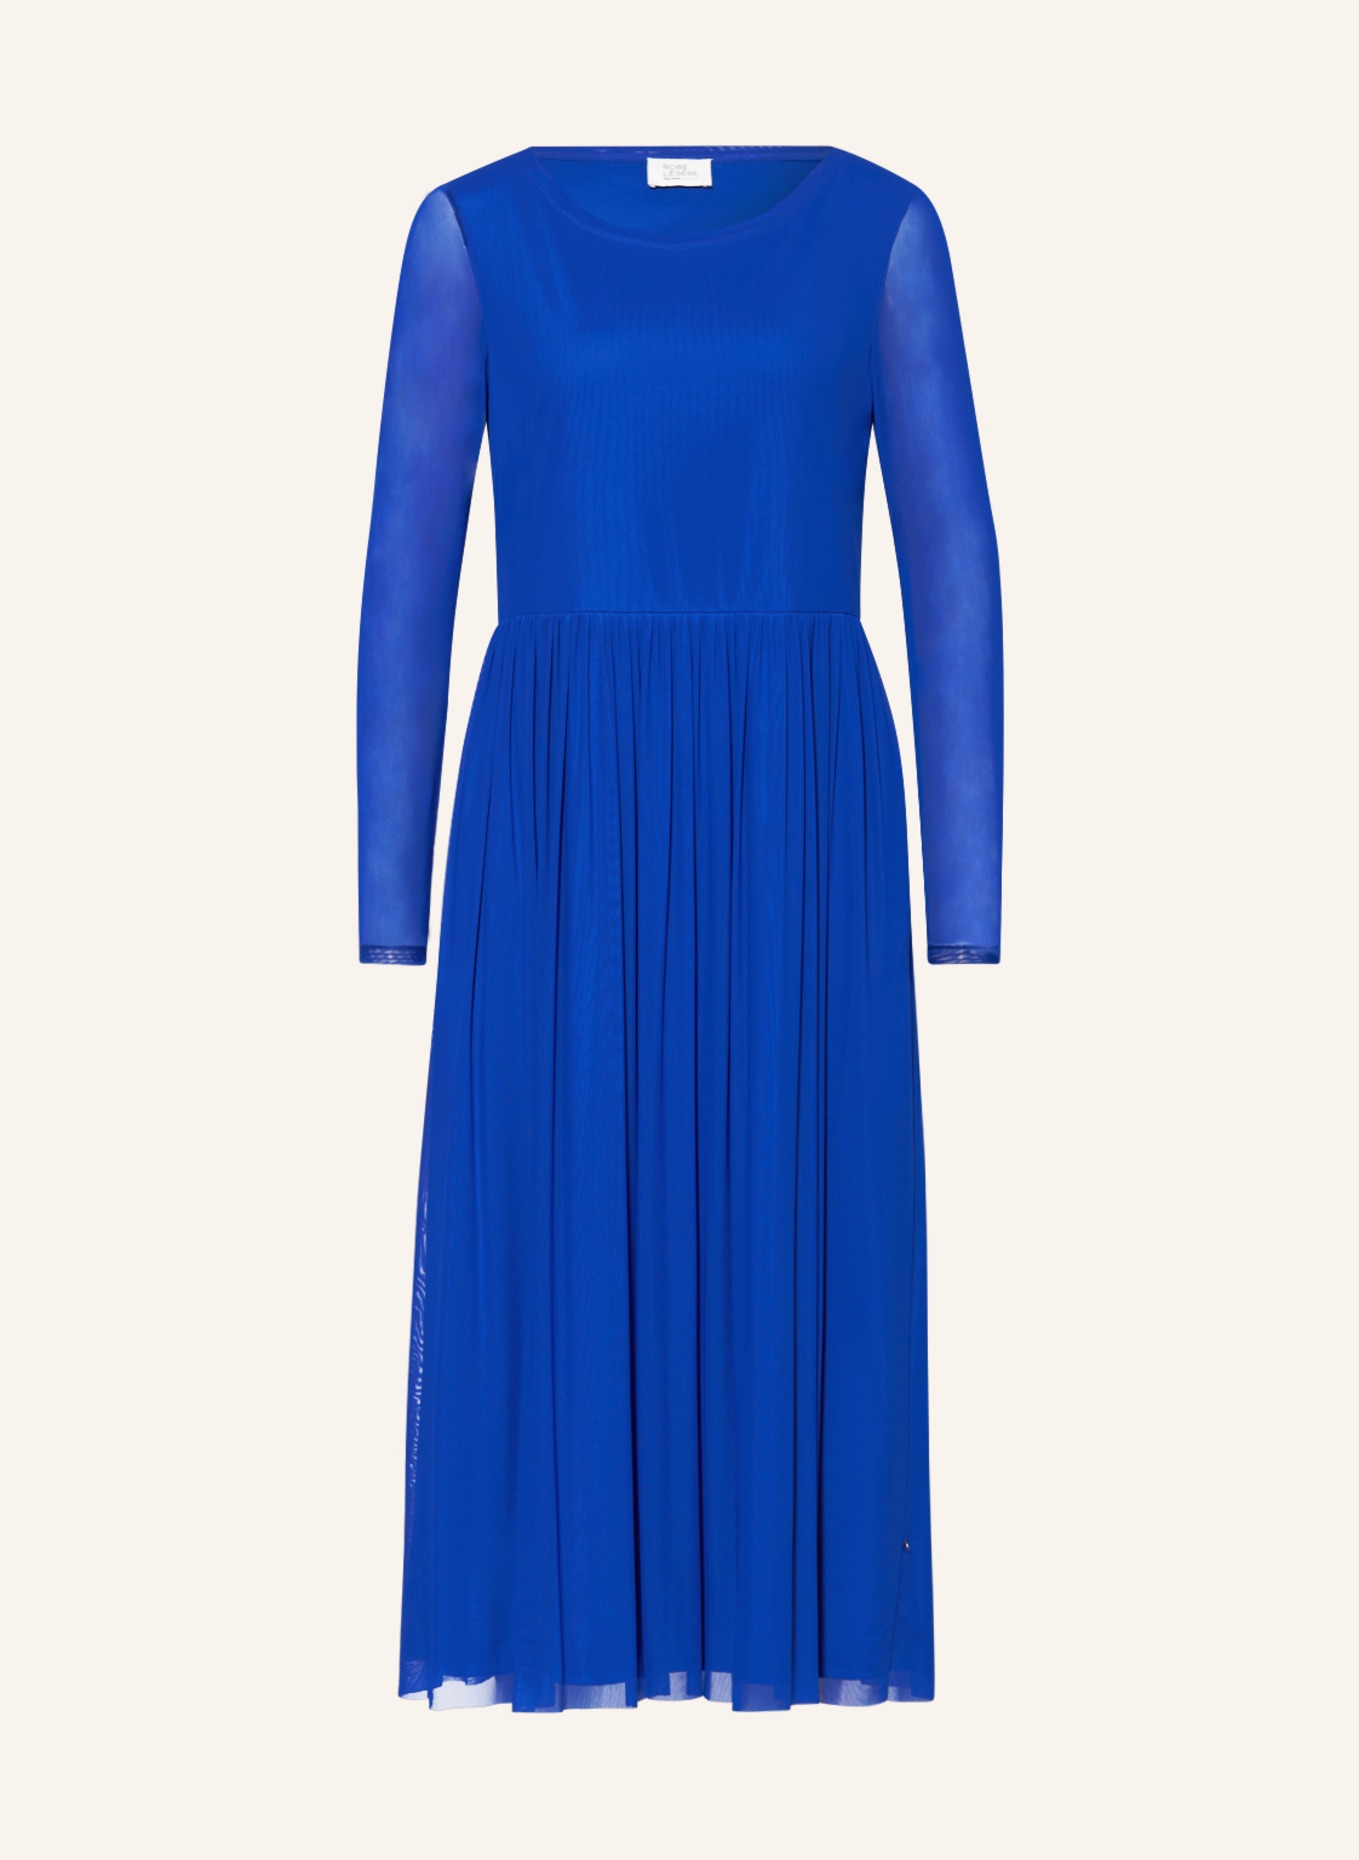 ROBE LÉGÈRE Mesh-Kleid, Farbe: BLAU (Bild 1)